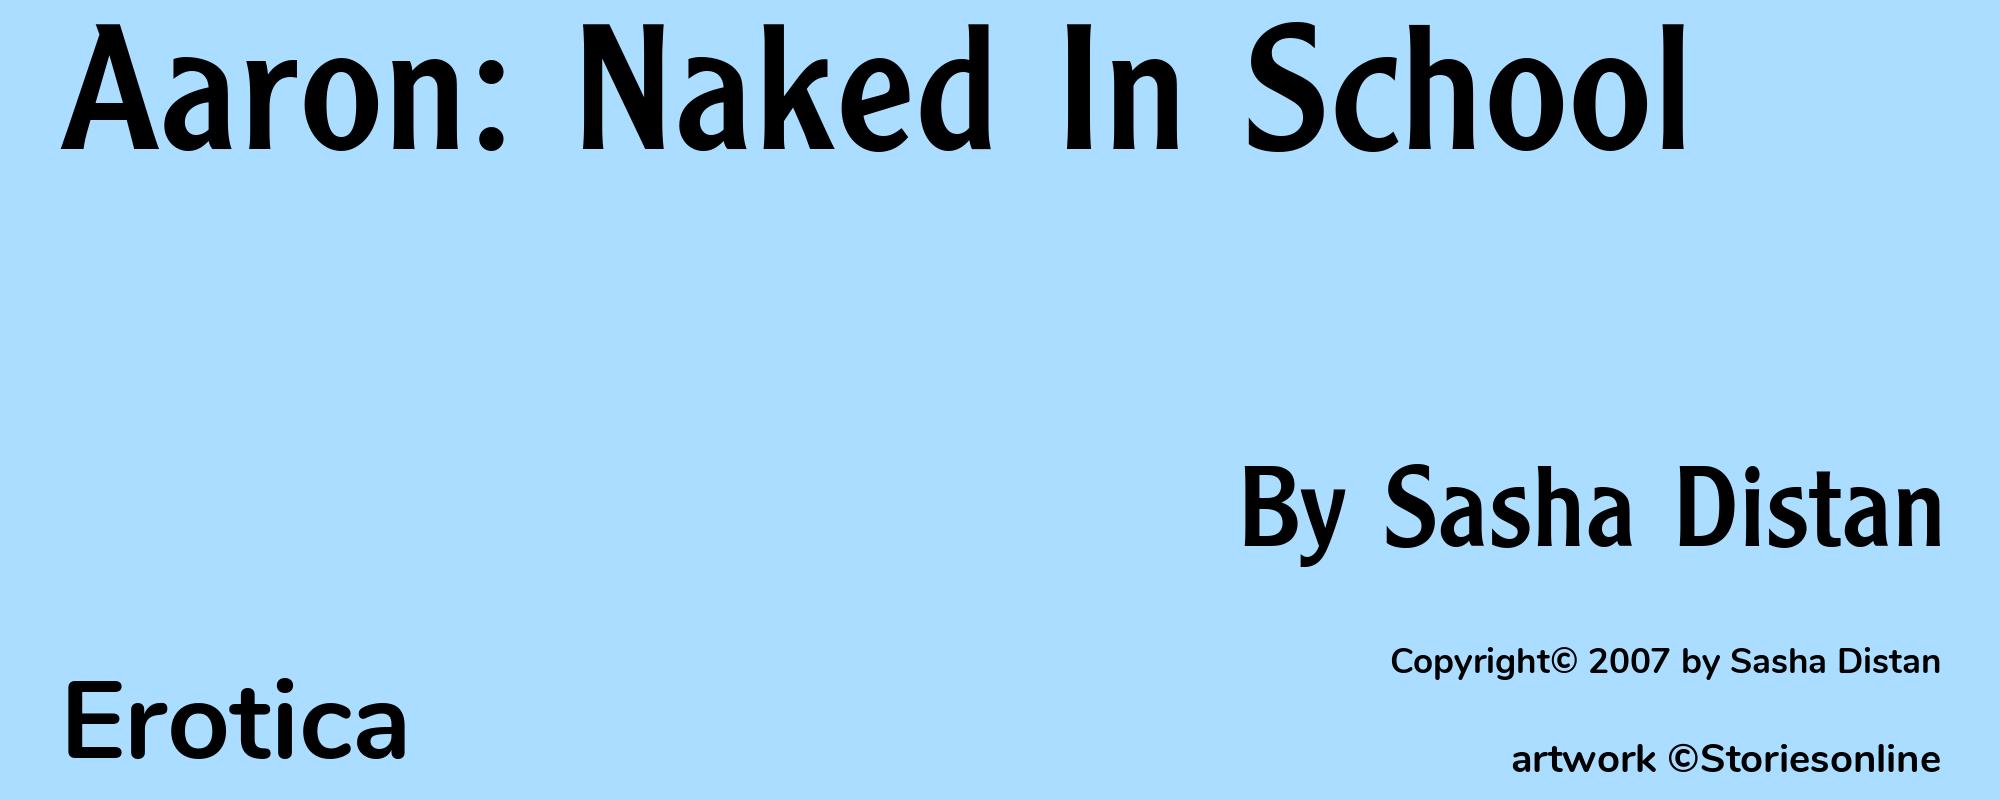 Aaron: Naked In School - Cover